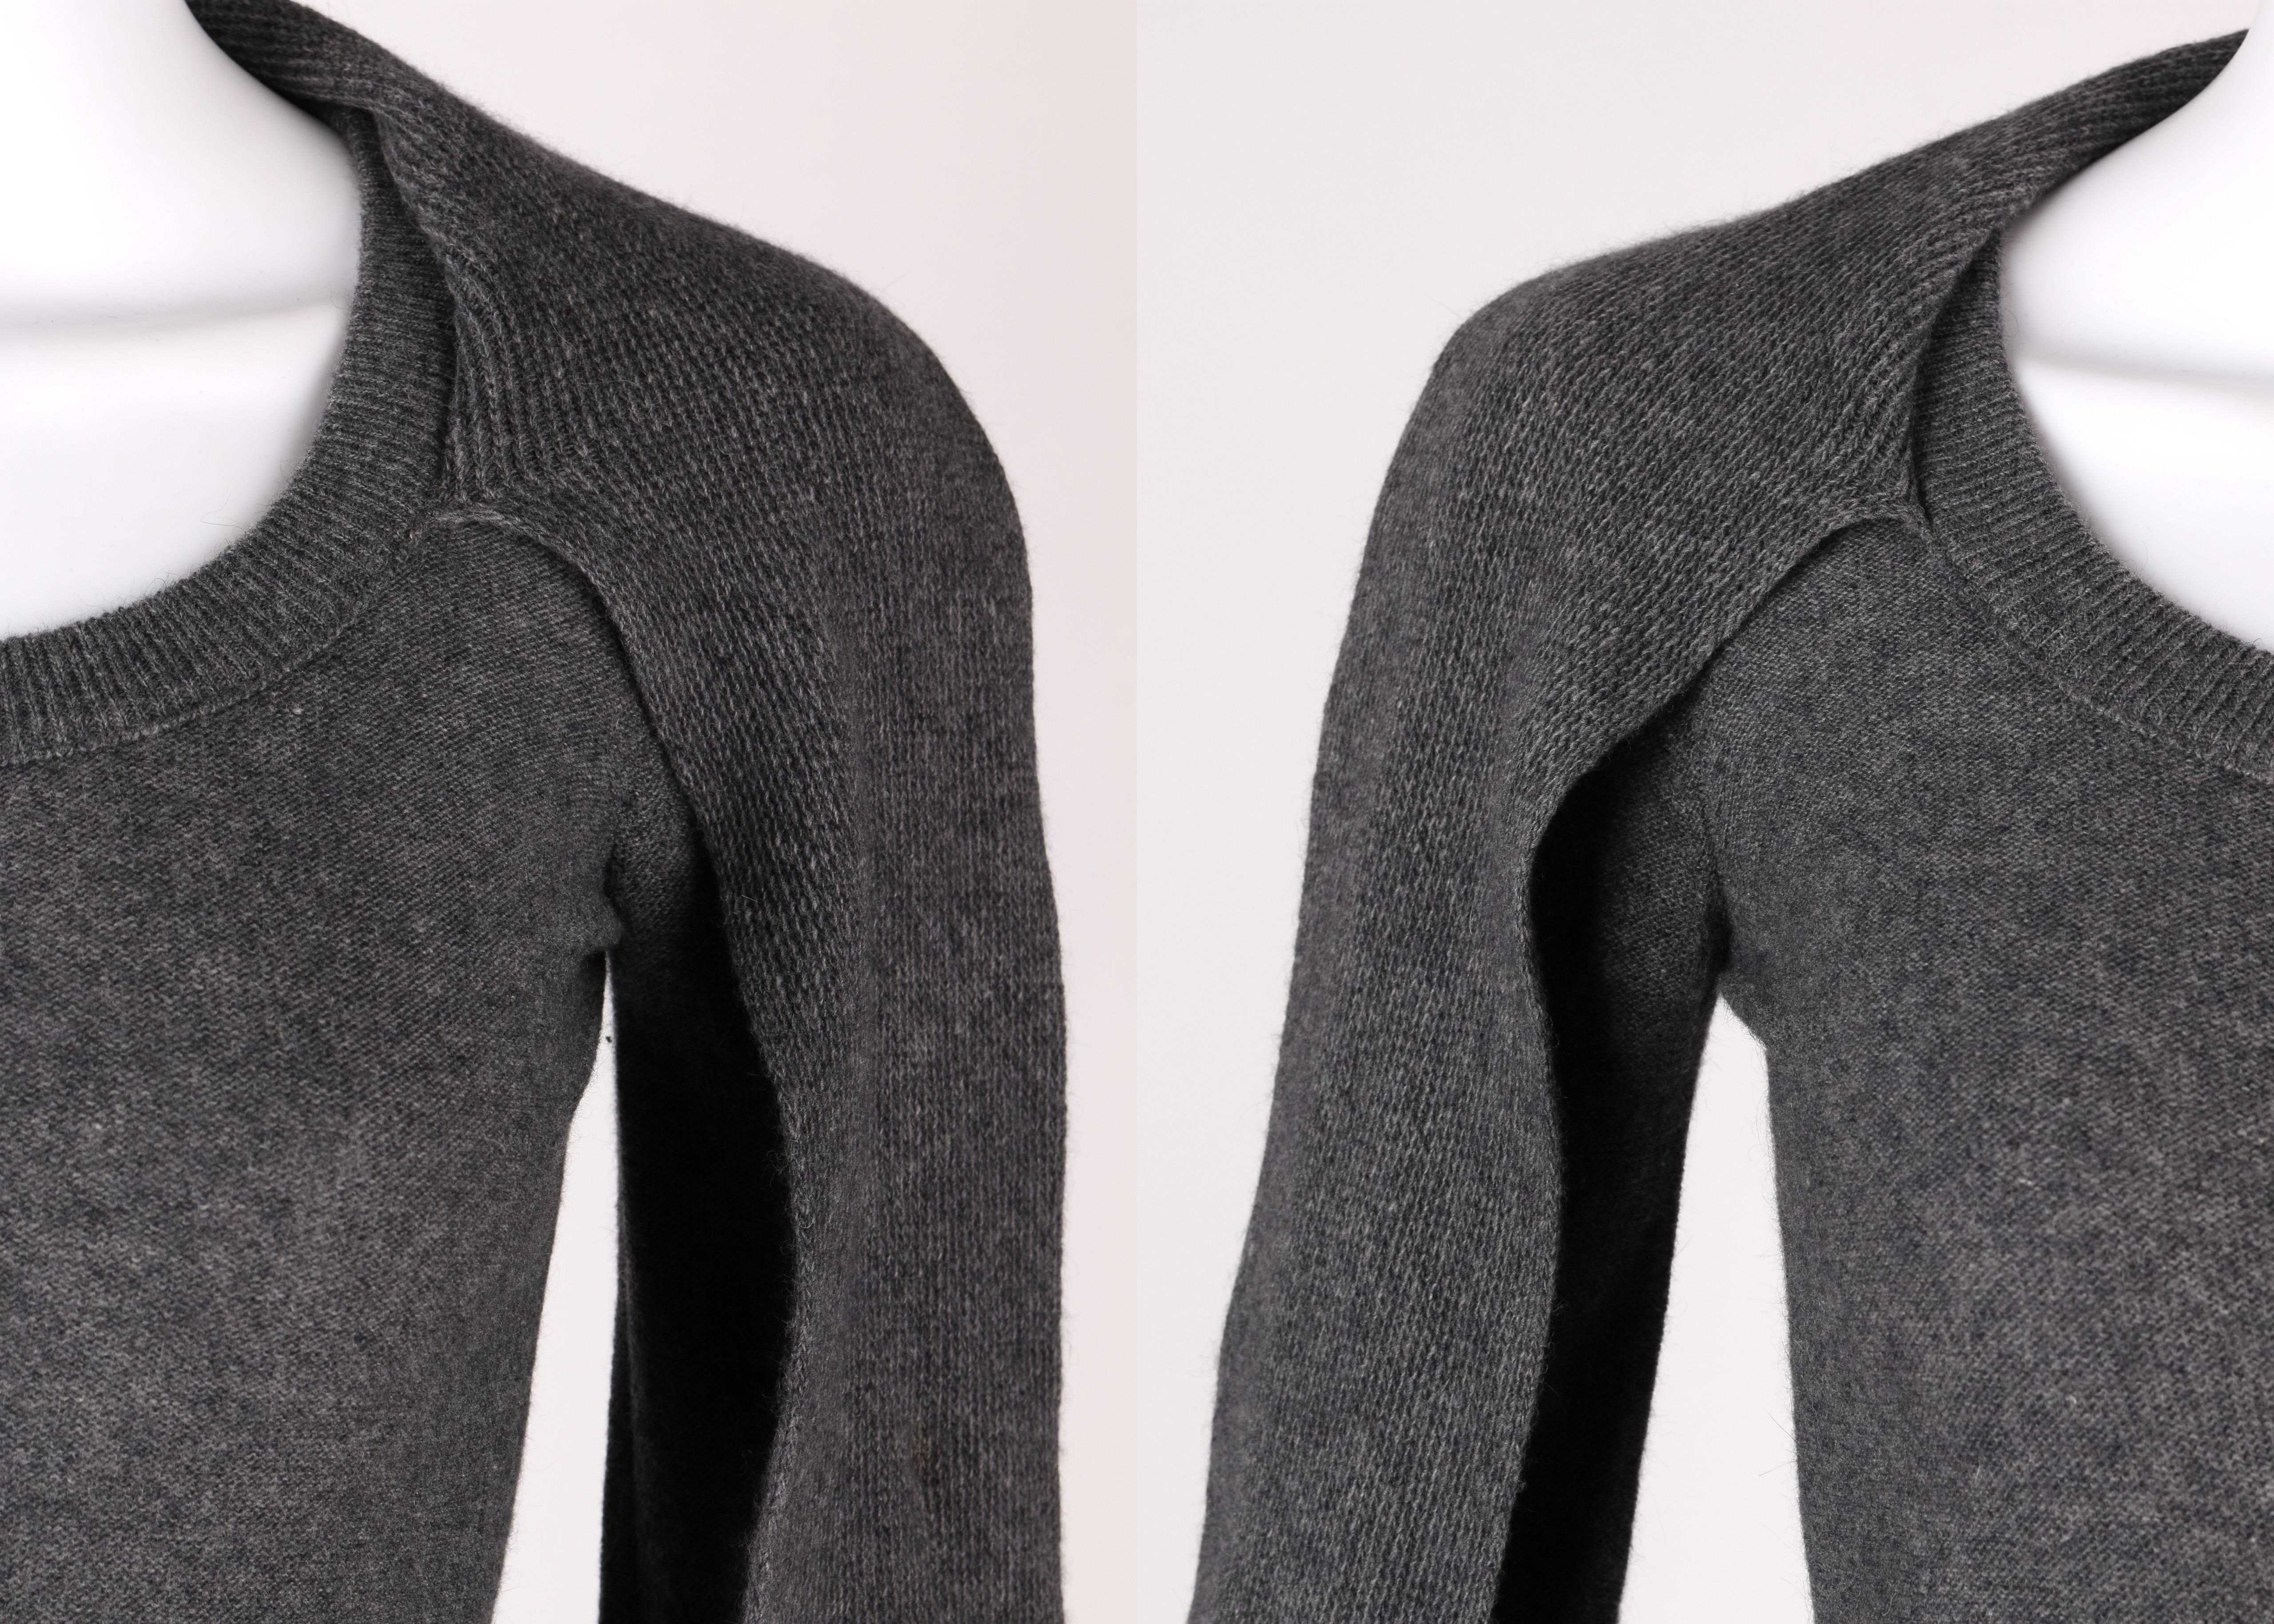 SONIA RYKIEL Chez Henri Bendel c.1960's Gray Wool Knit Scarf Pullover Sweater 2